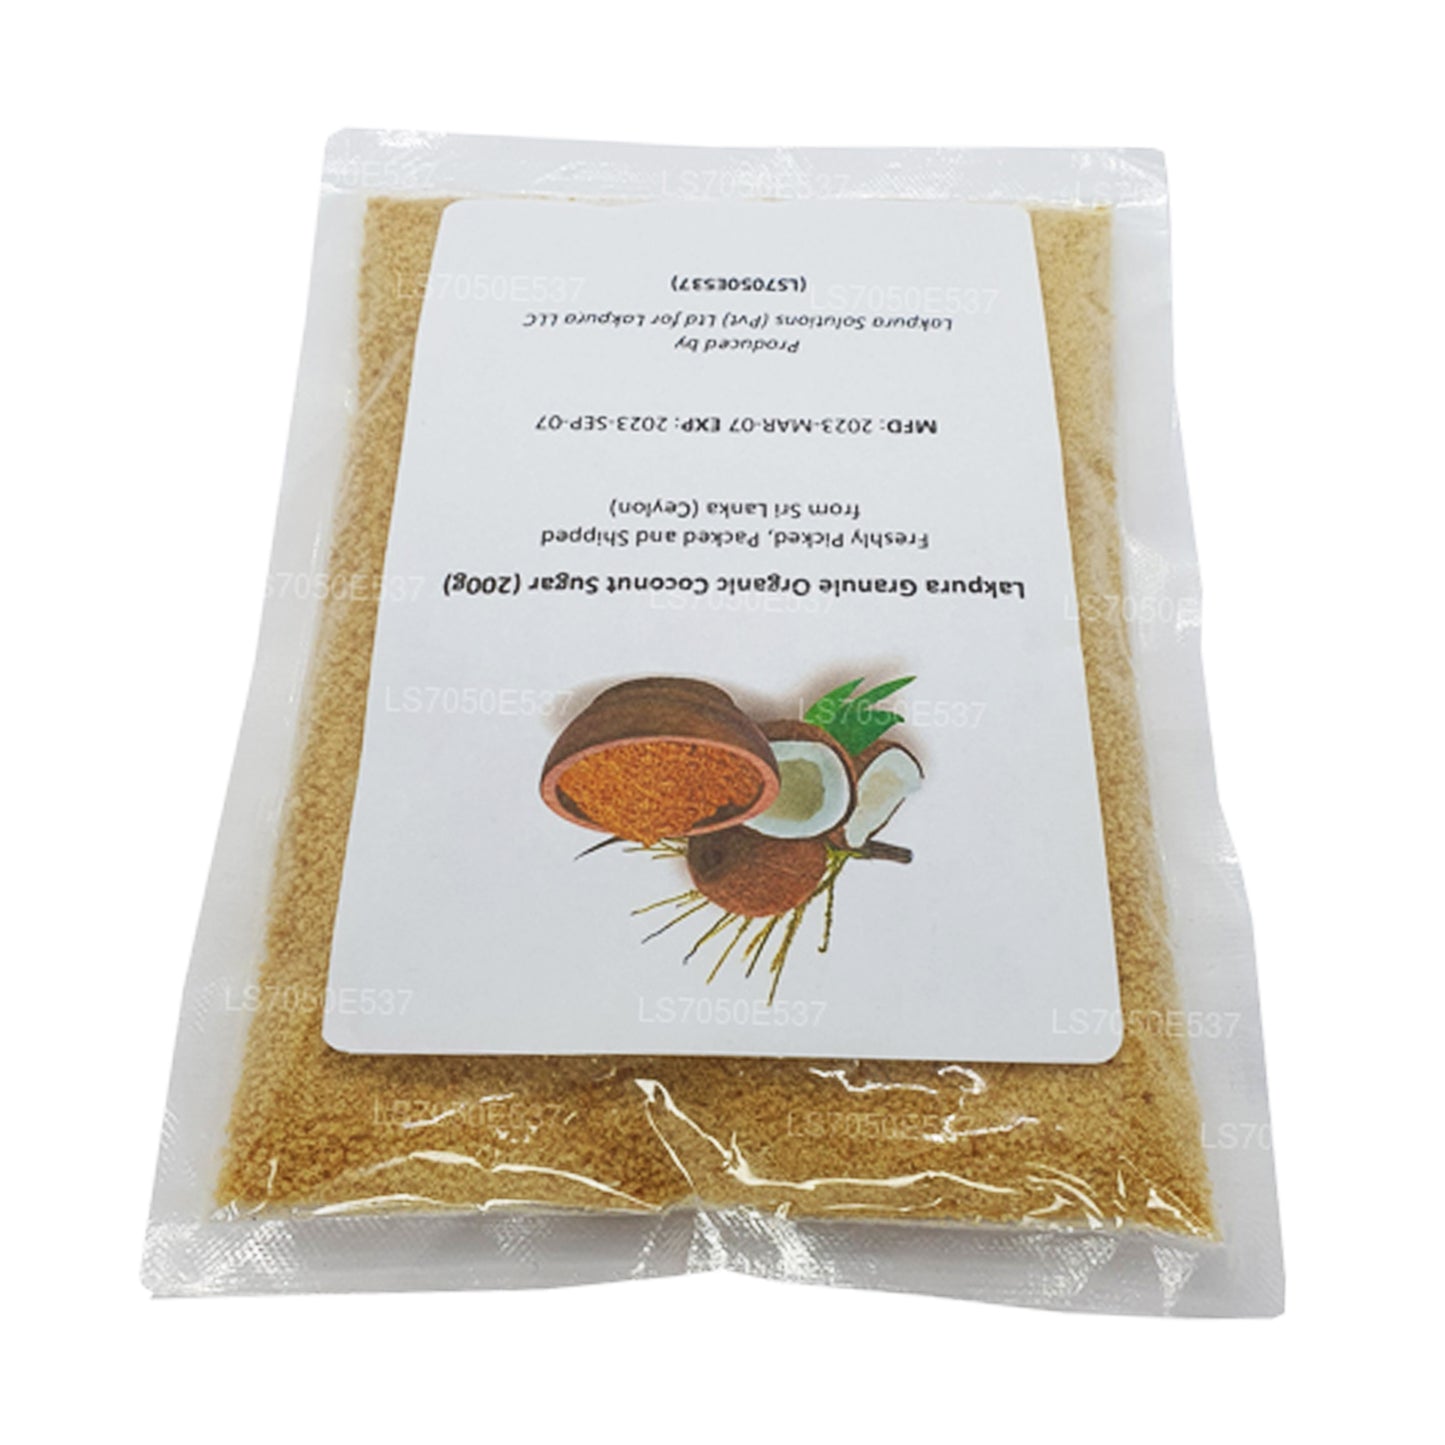 Lakpura Granula Organisk Kokosnød Sukker